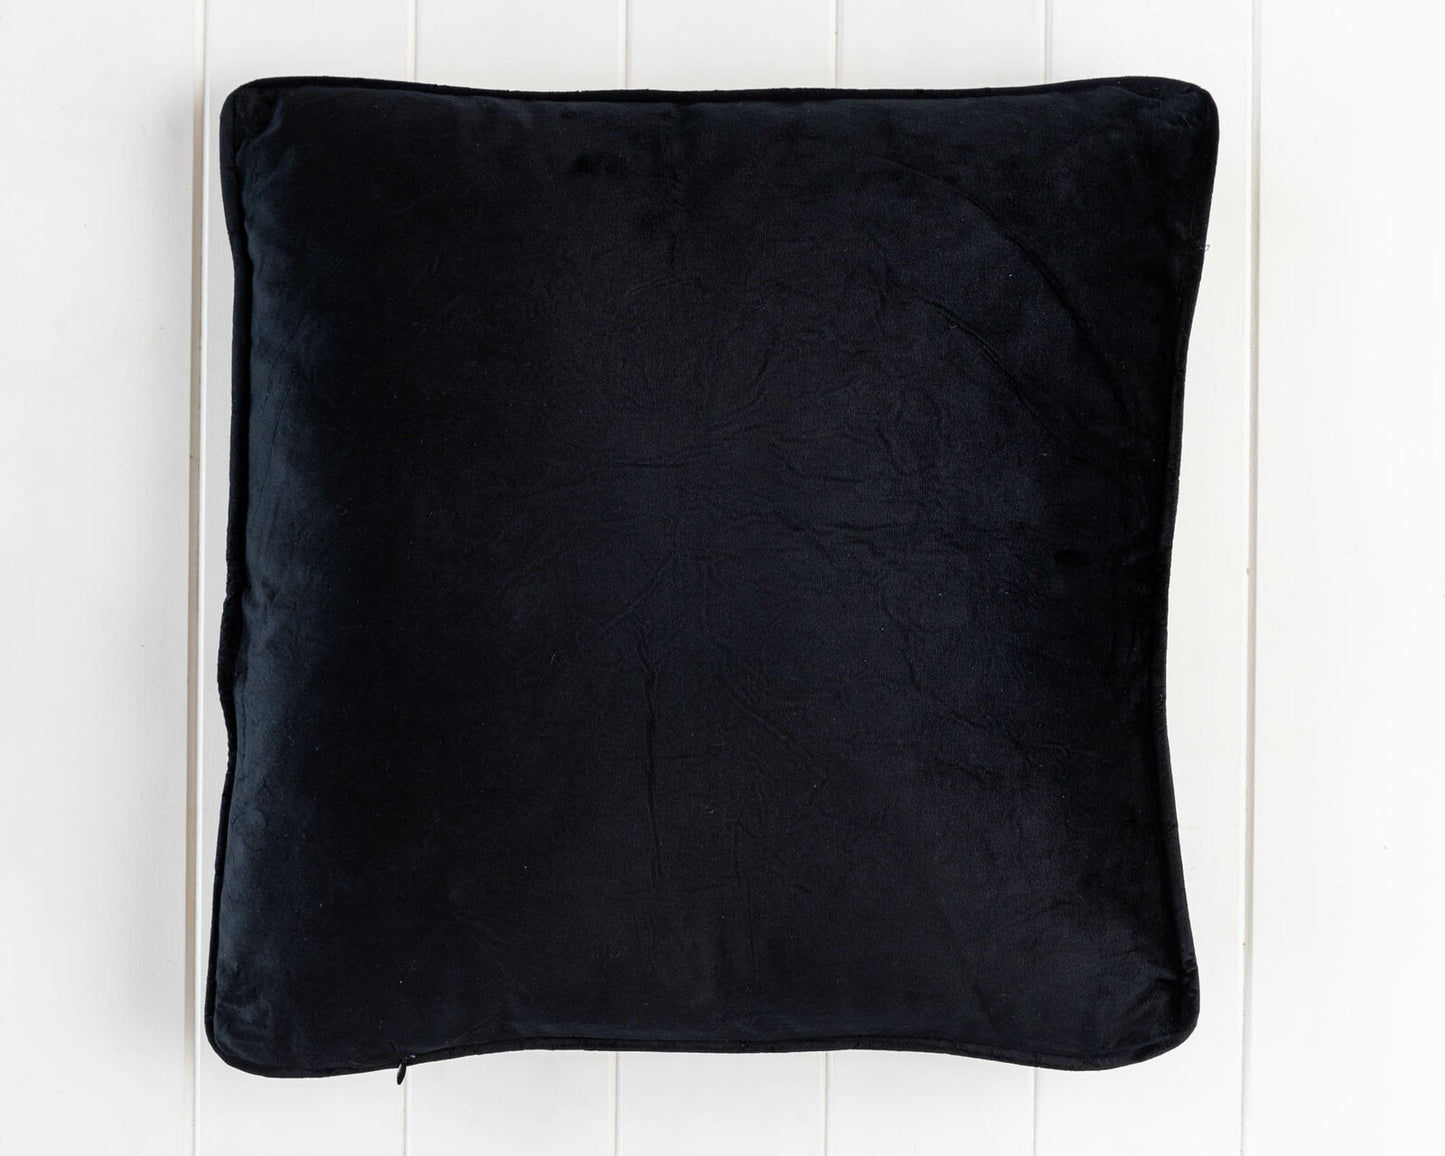 Tropical Monkey cotton & velvet cushion cover